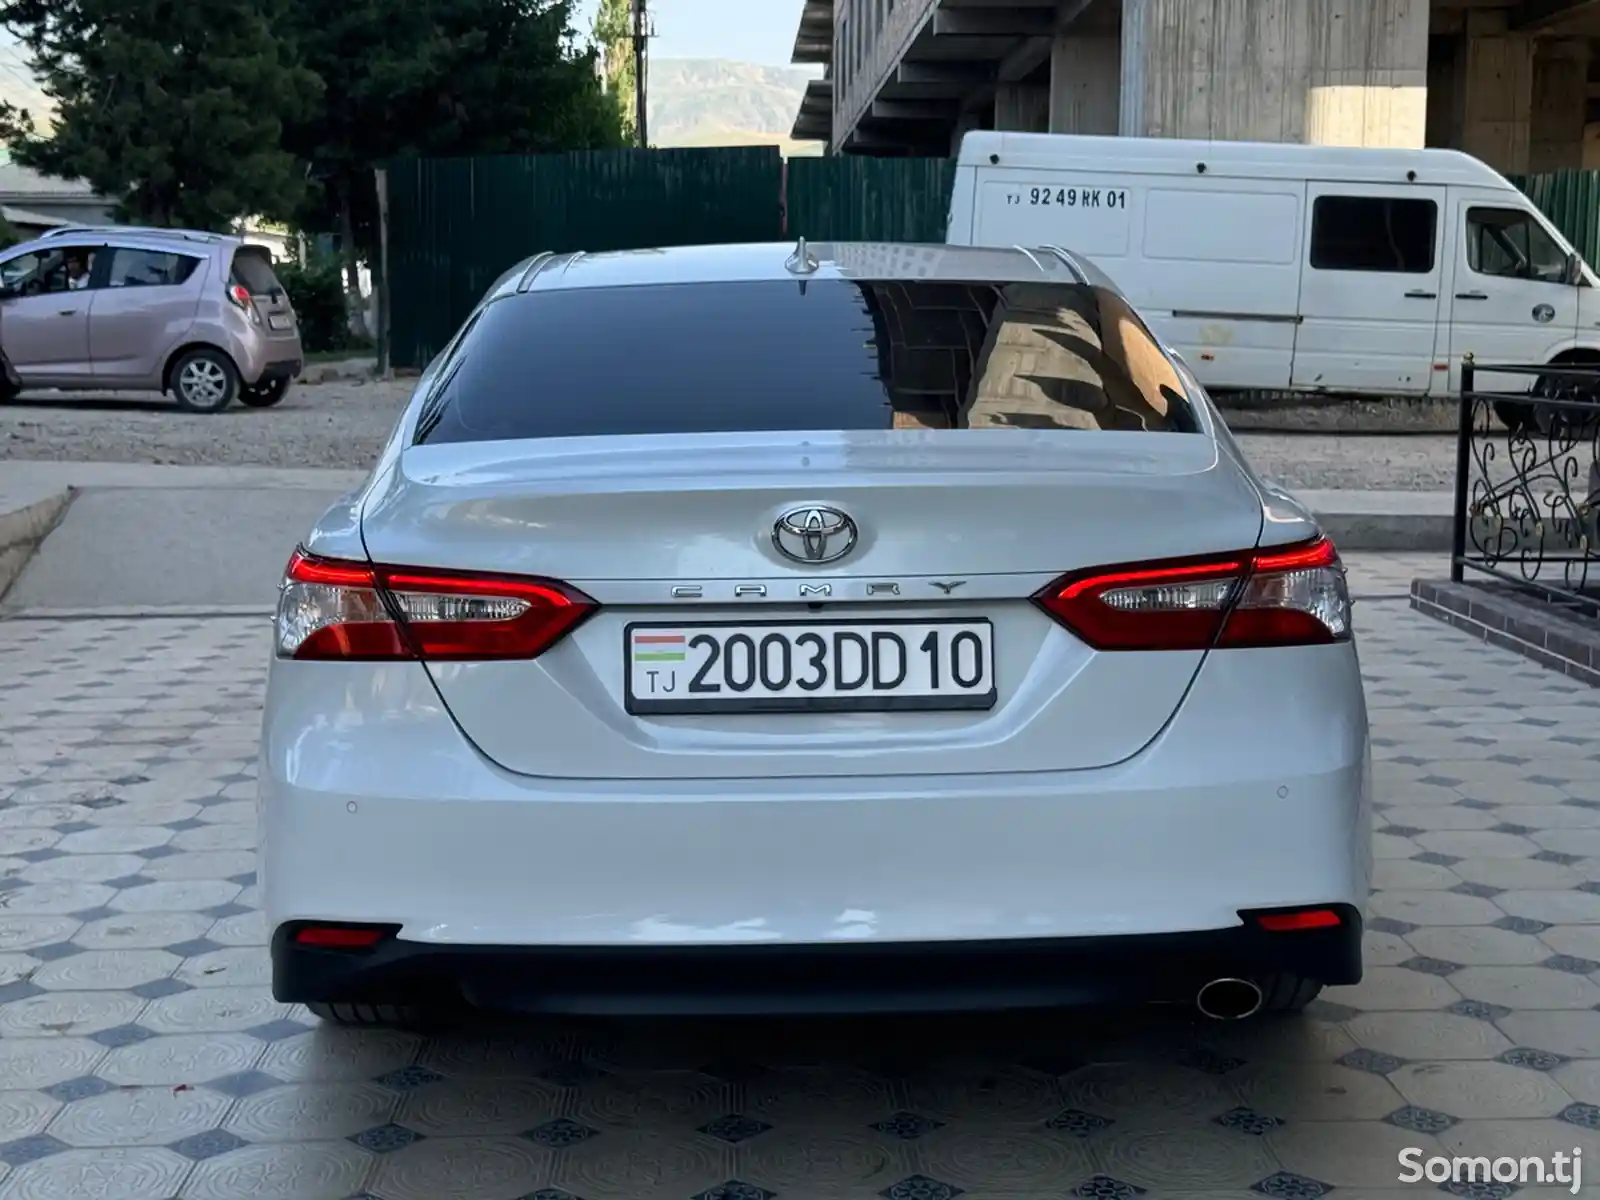 Toyota Camry, 2019-3